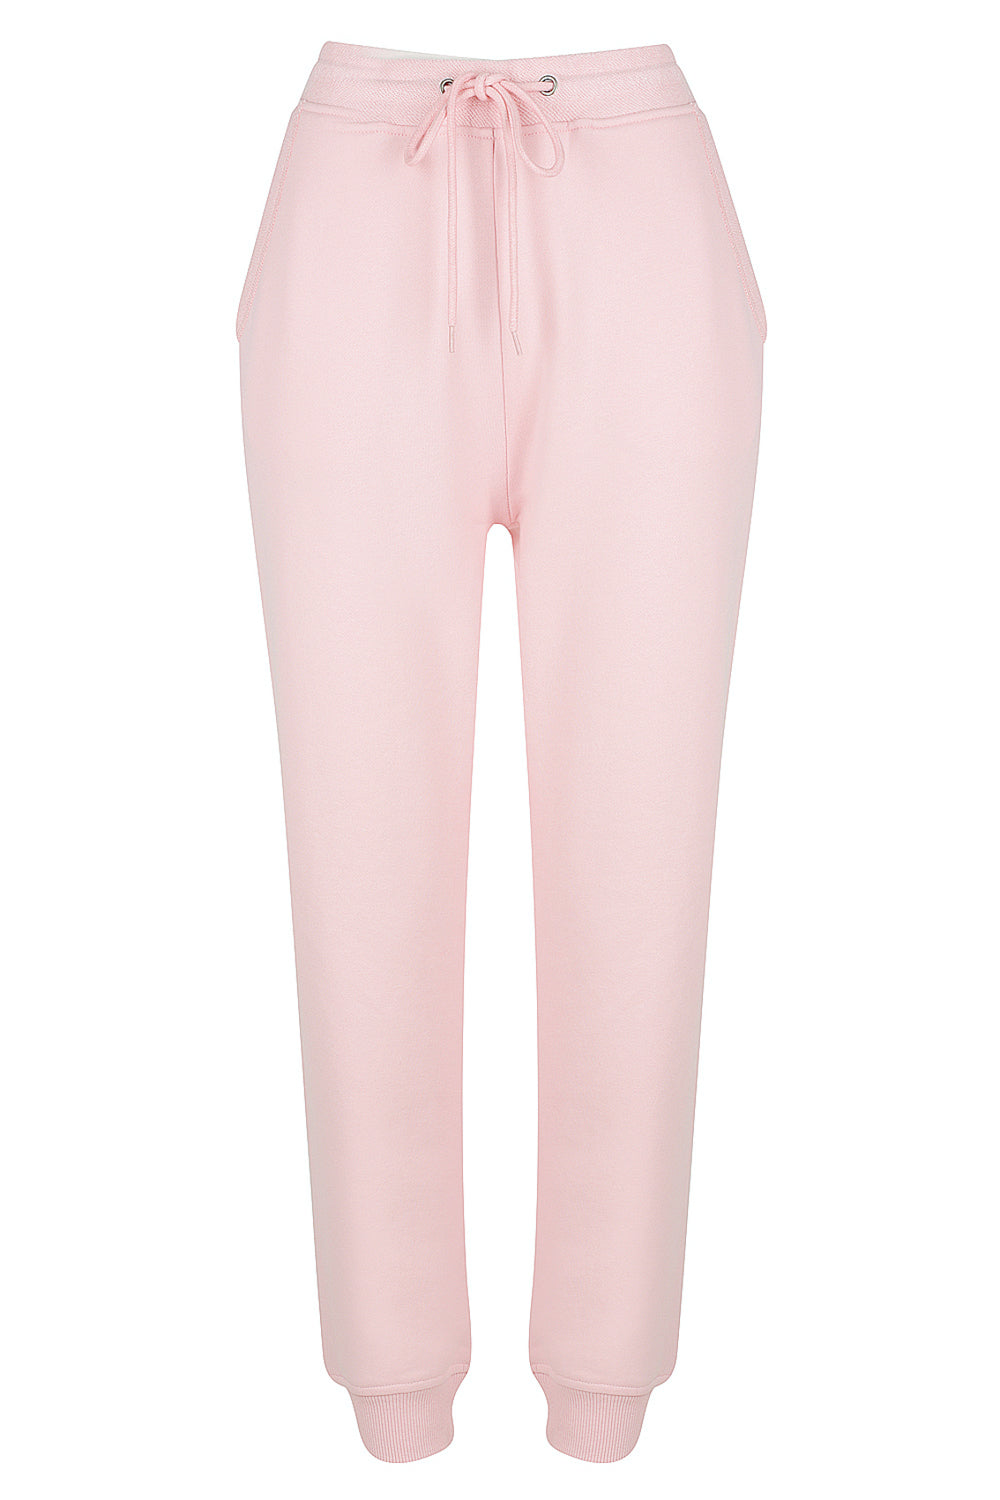 Tori Basic Track Pant - pretty pink